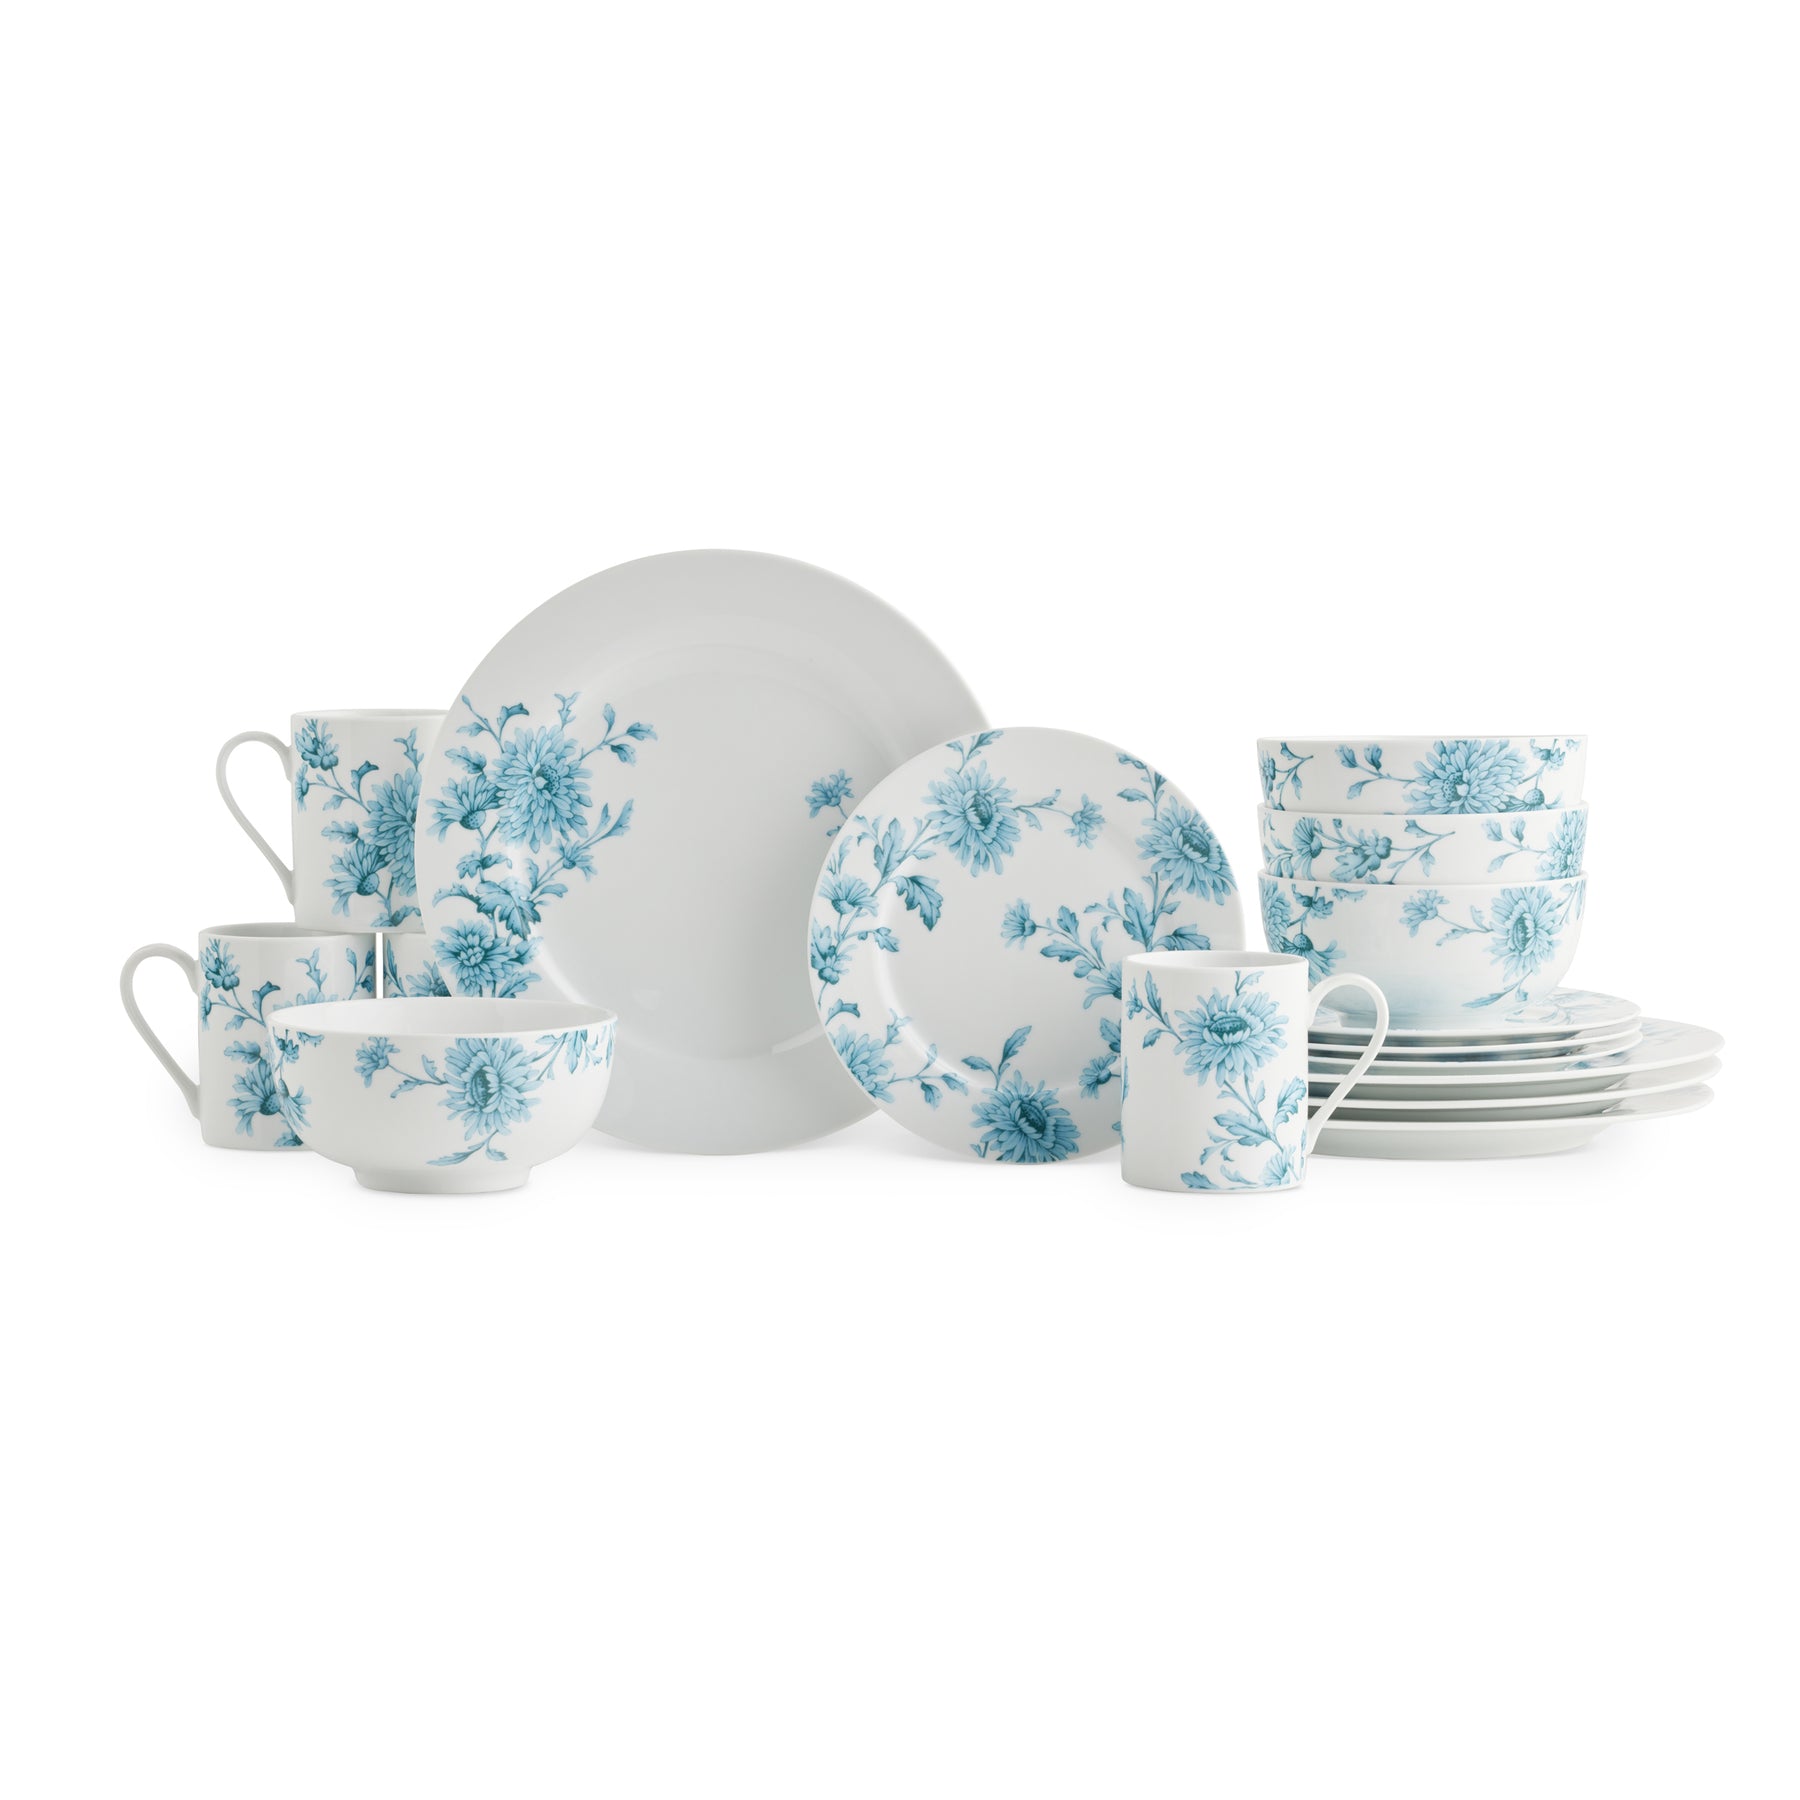 Spode Home Vintage Denim 16-piece Porcelain Dinnerware Set